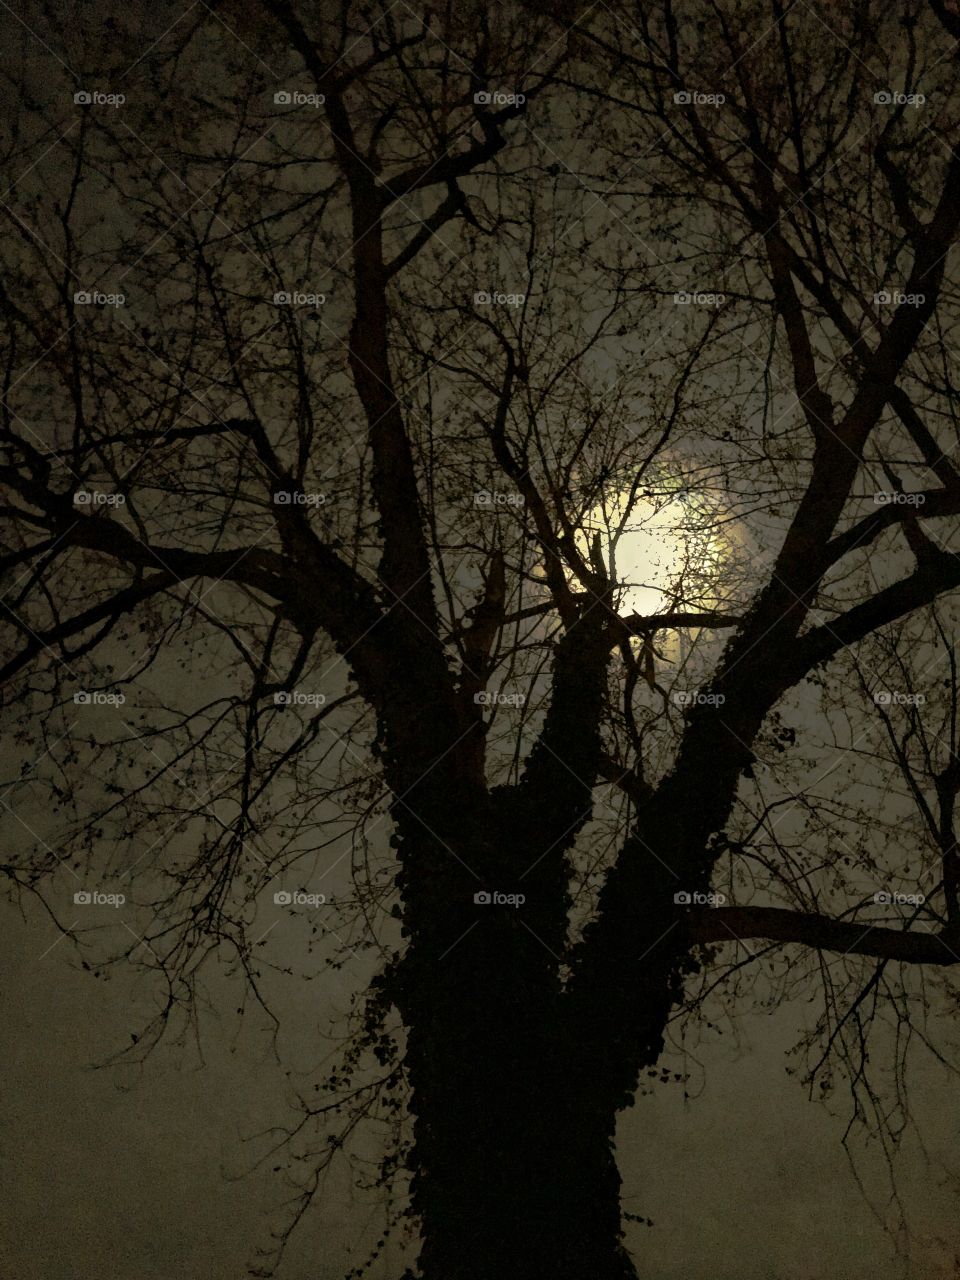 Moon and tree